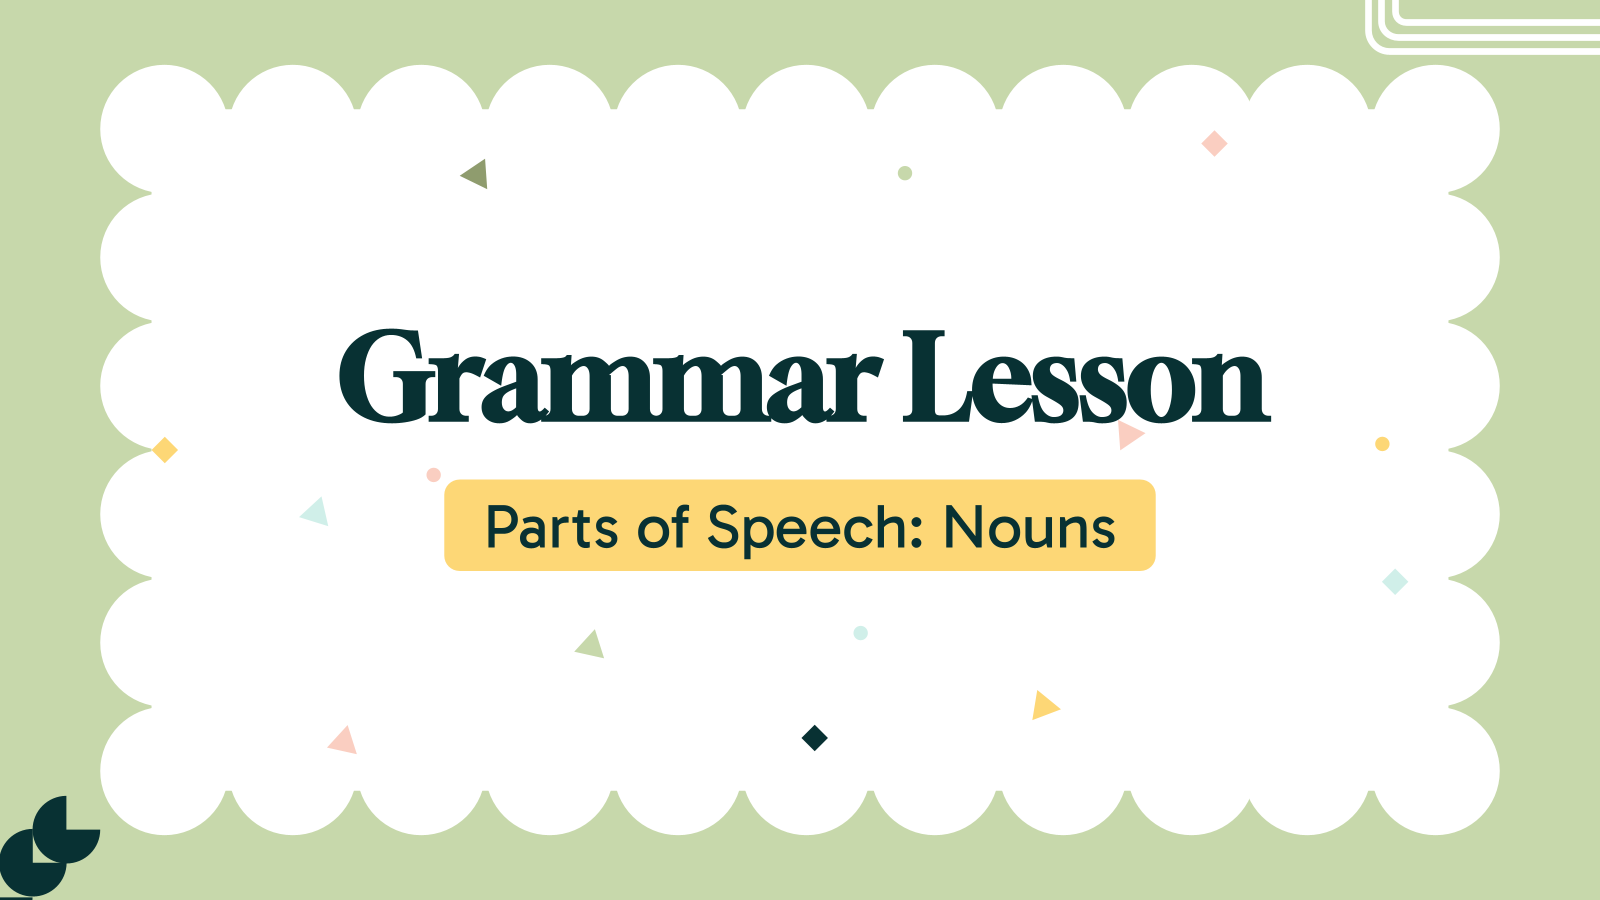 Classroom Grammar Lesson Presentation Template